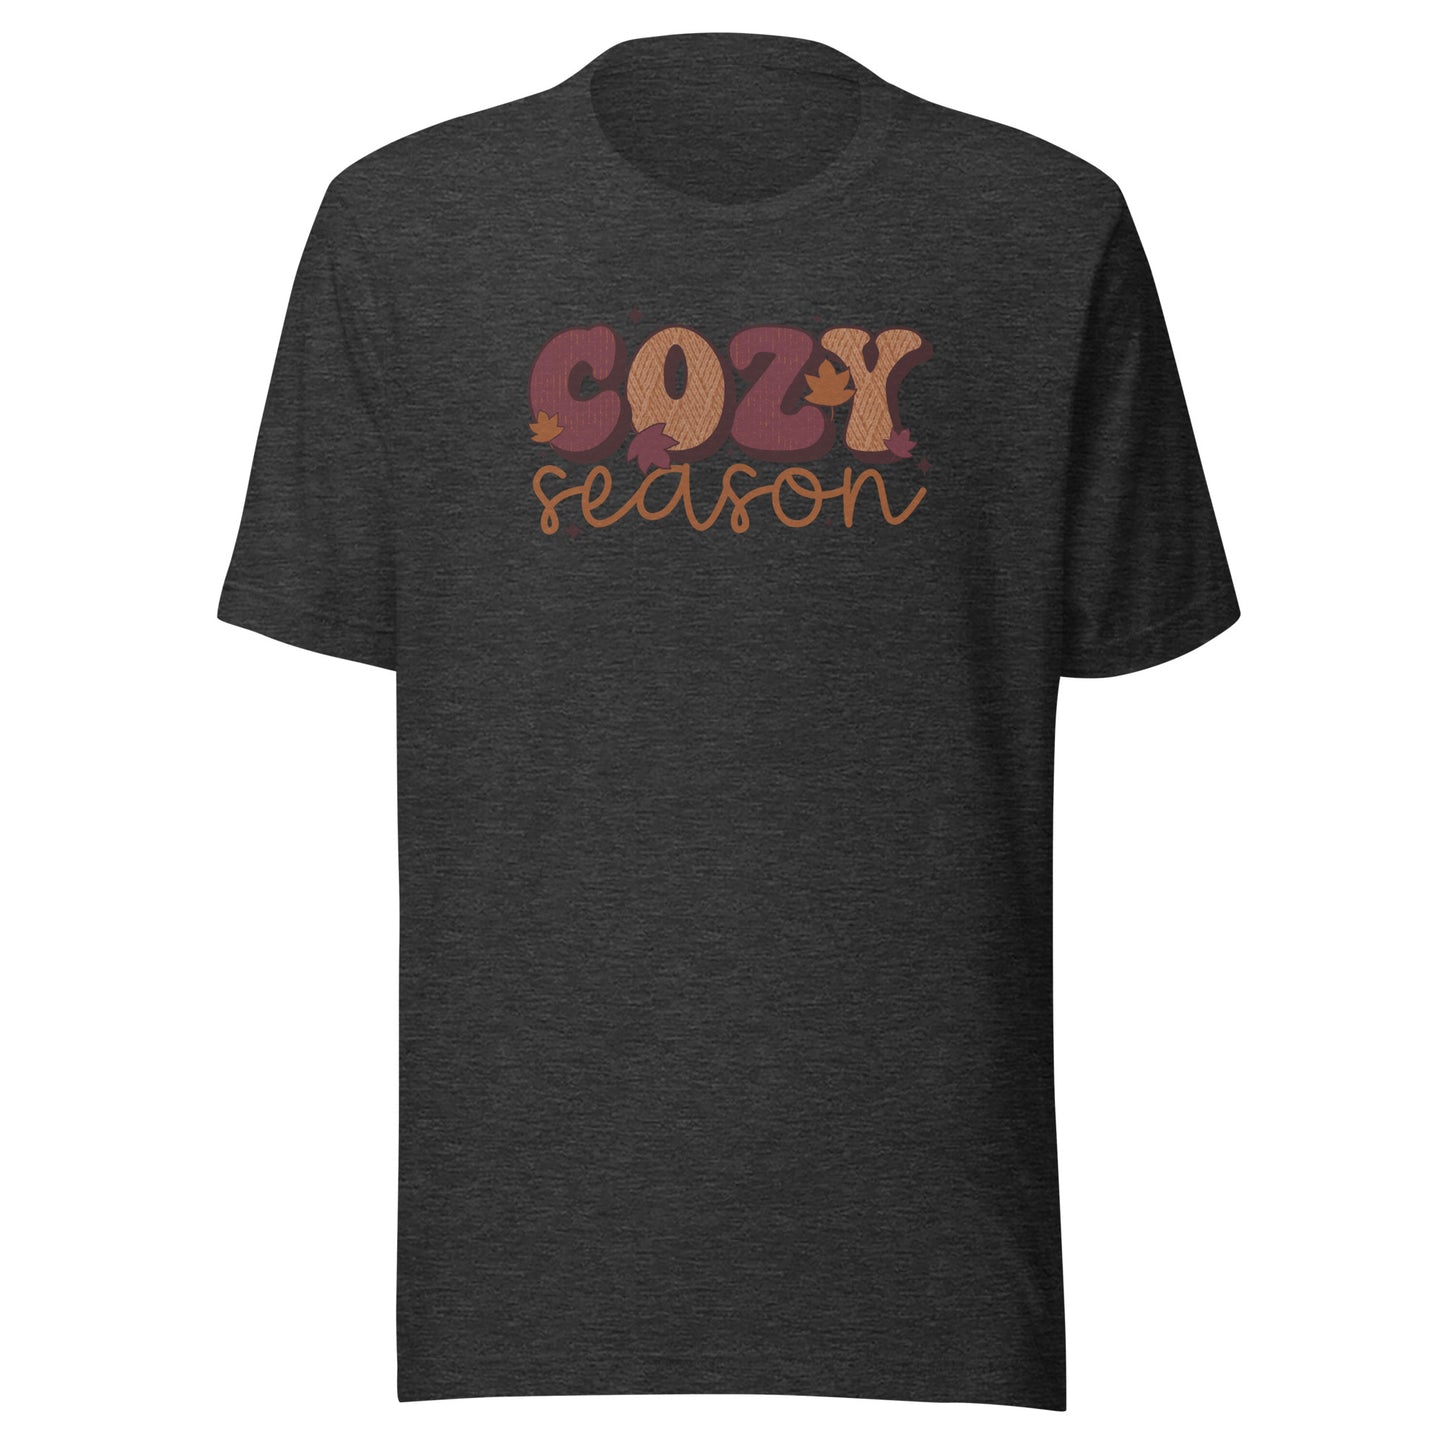 Cozy Season Warm Colors T-Shirt